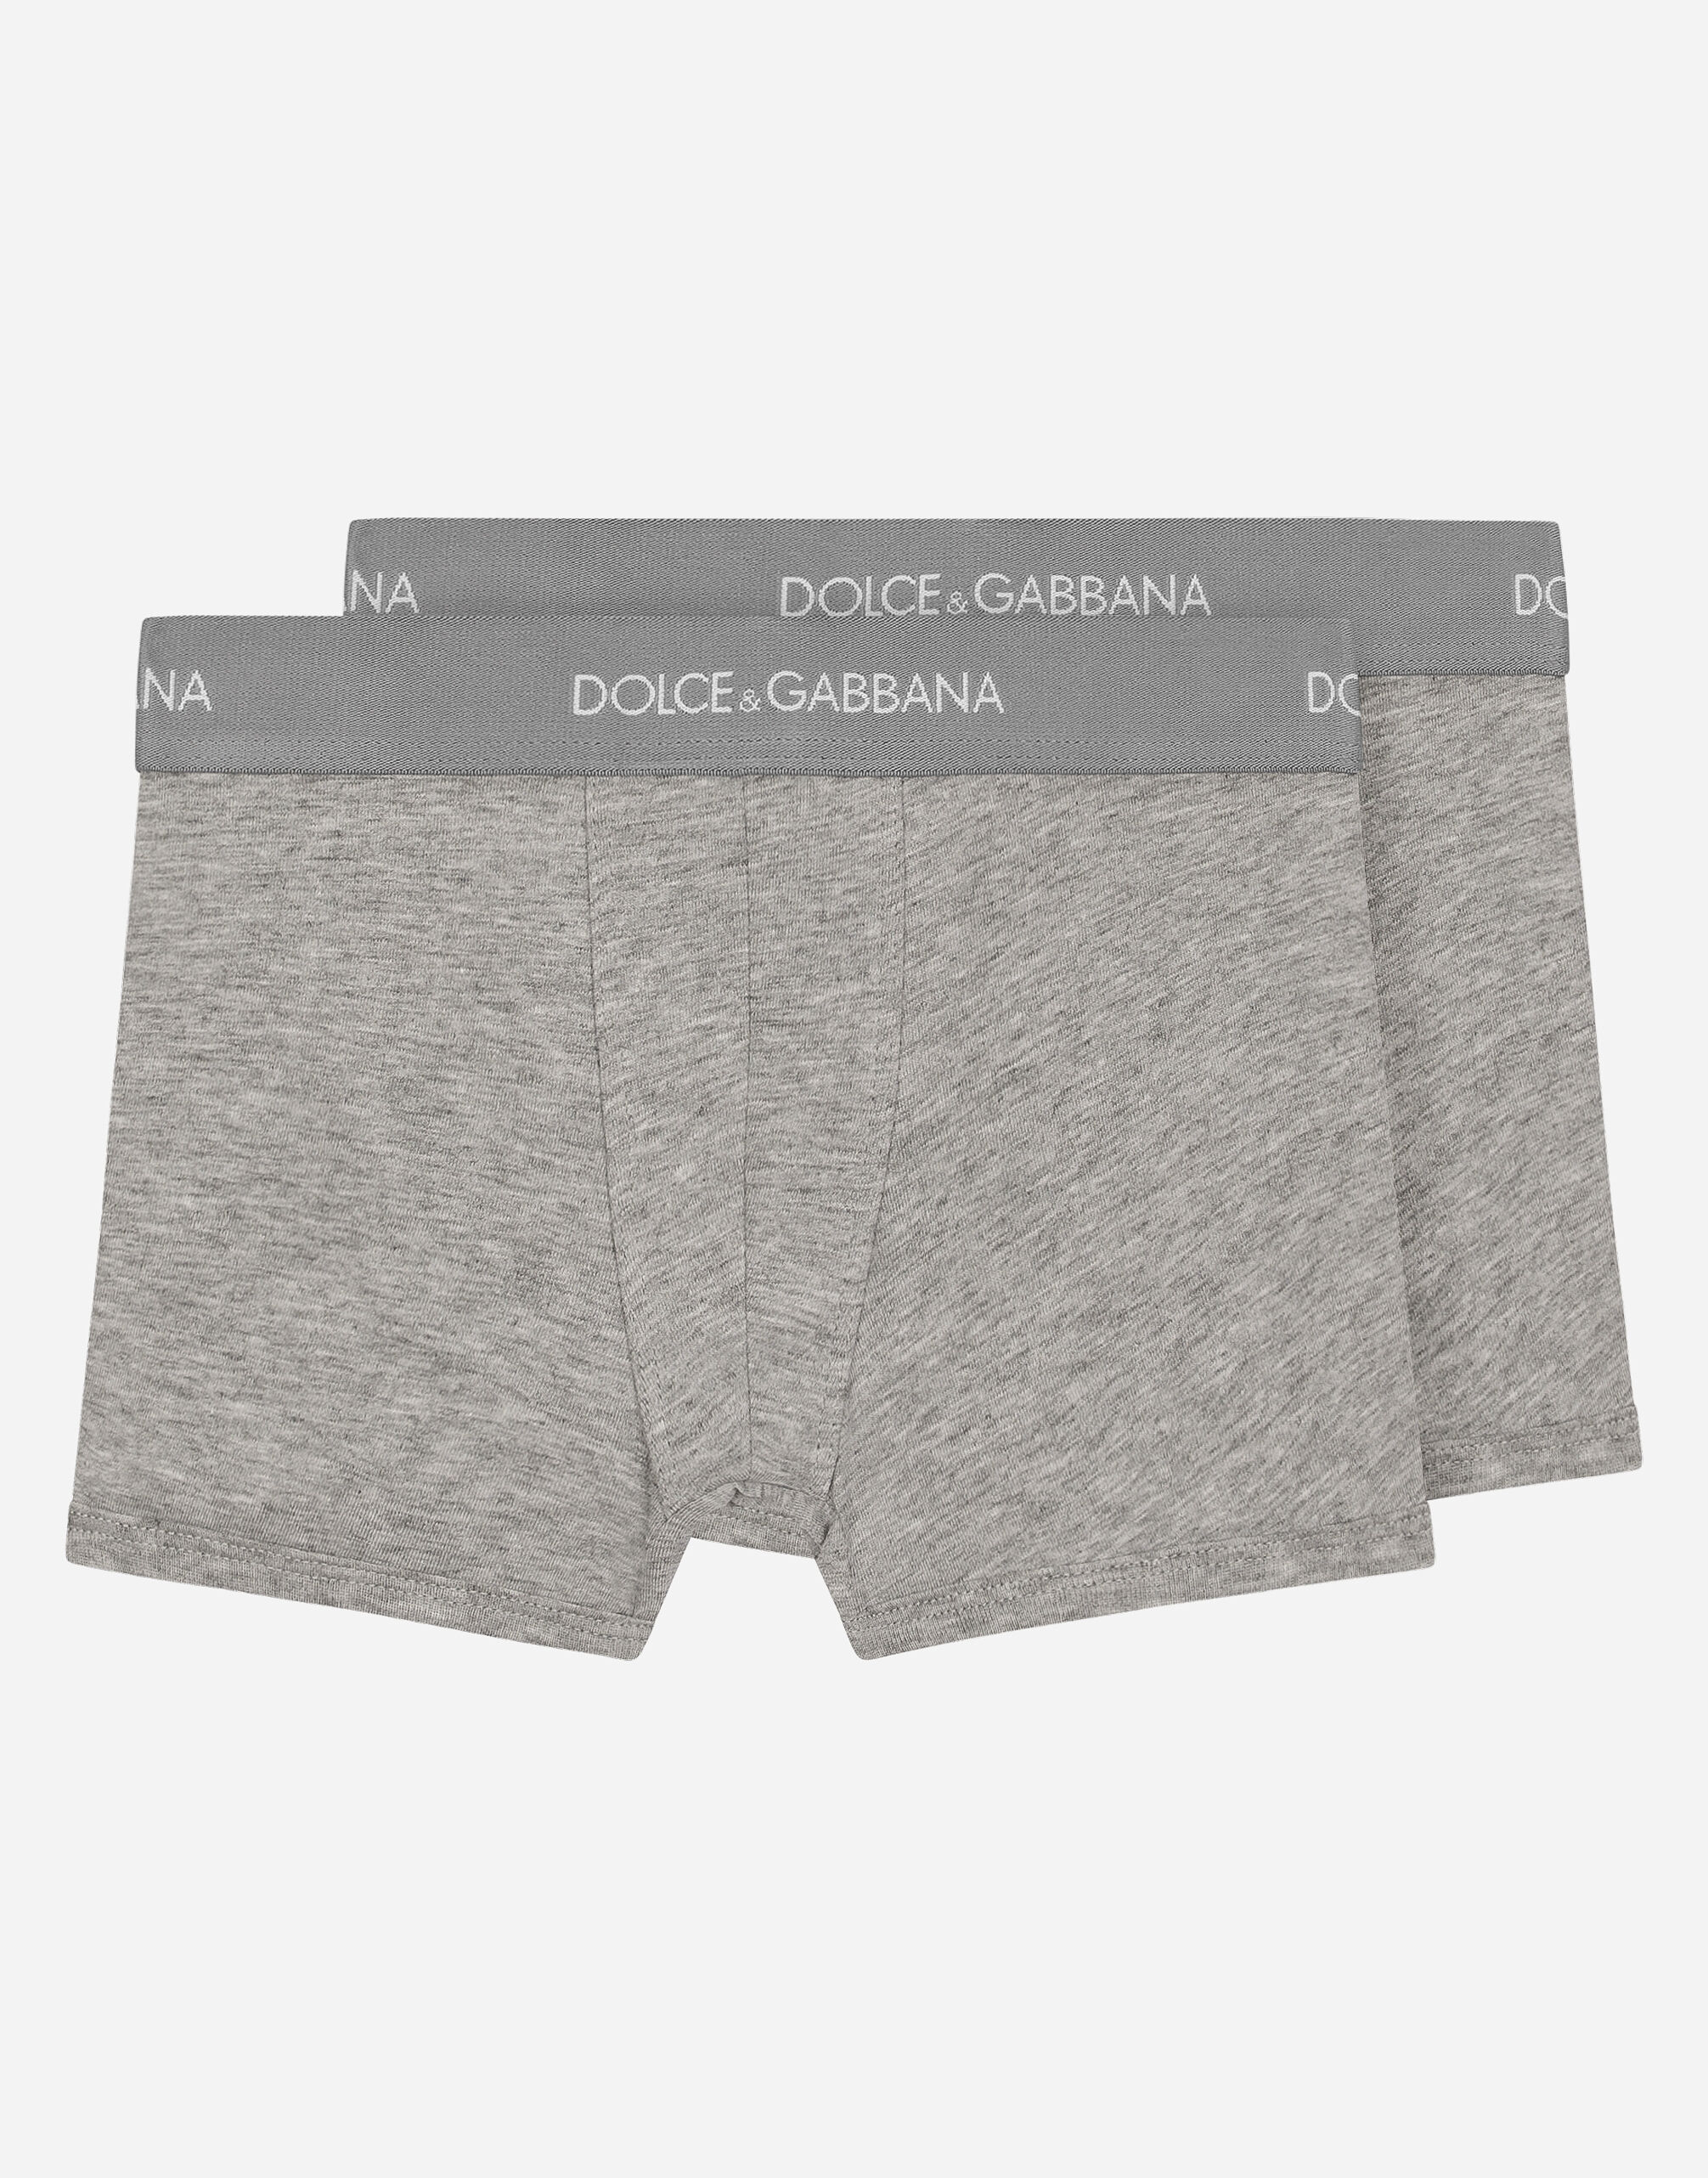 Dolce & Gabbana Boxer two-pack with branded elastic Black L4J702G7OCU